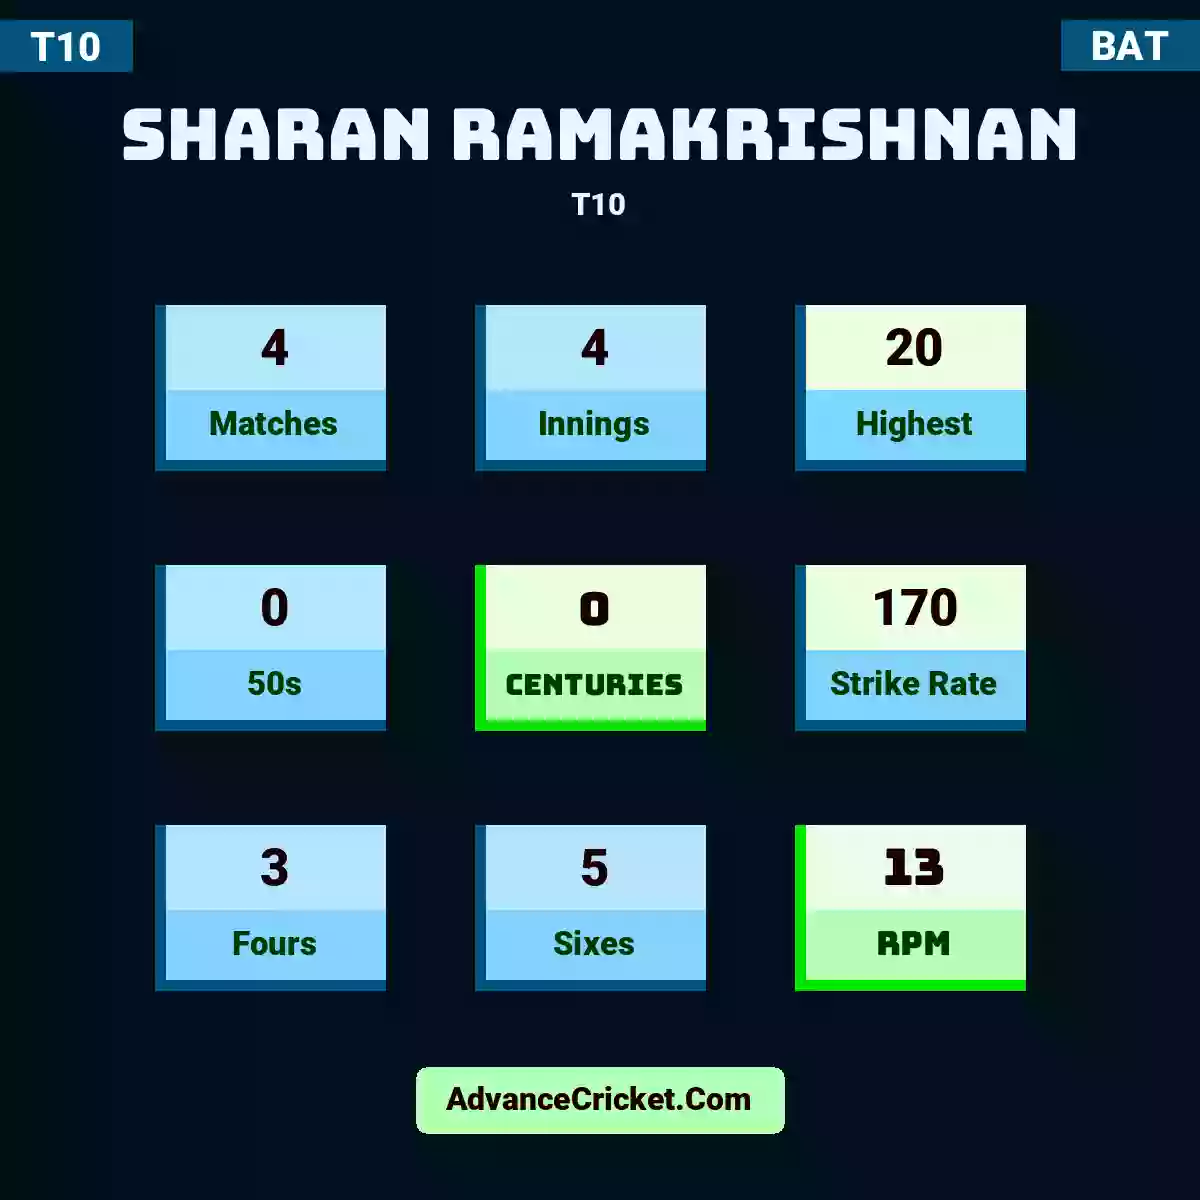 Sharan Ramakrishnan T10 , Sharan Ramakrishnan played 4 matches, scored 20 runs as highest, 0 half-centuries, and 0 centuries, with a strike rate of 170. S.Ramakrishnan hit 3 fours and 5 sixes, with an RPM of 13.